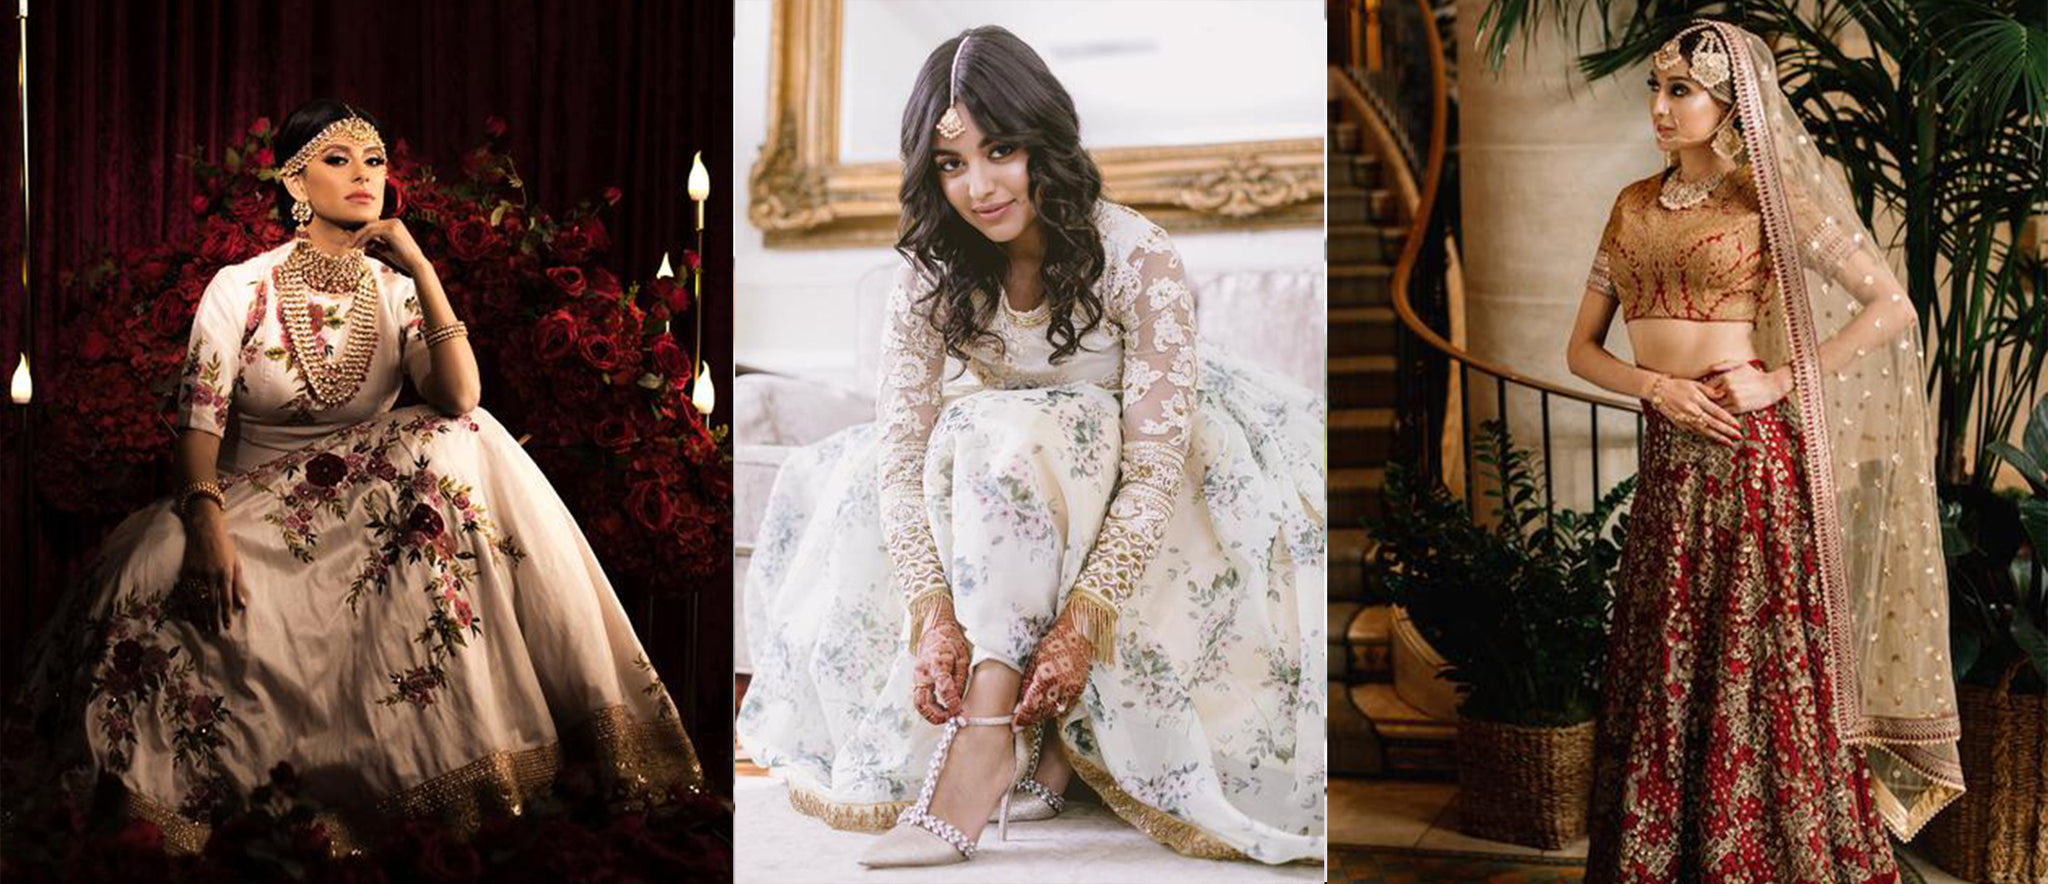 💕𝓙𝓪𝓯𝓯𝓮𝓻 𝓕𝓪𝓻𝓪𝔃 𝓶𝓪𝓷𝓪𝓷 | Indian fashion dresses, Wedding  lehenga designs, Designer dresses indian